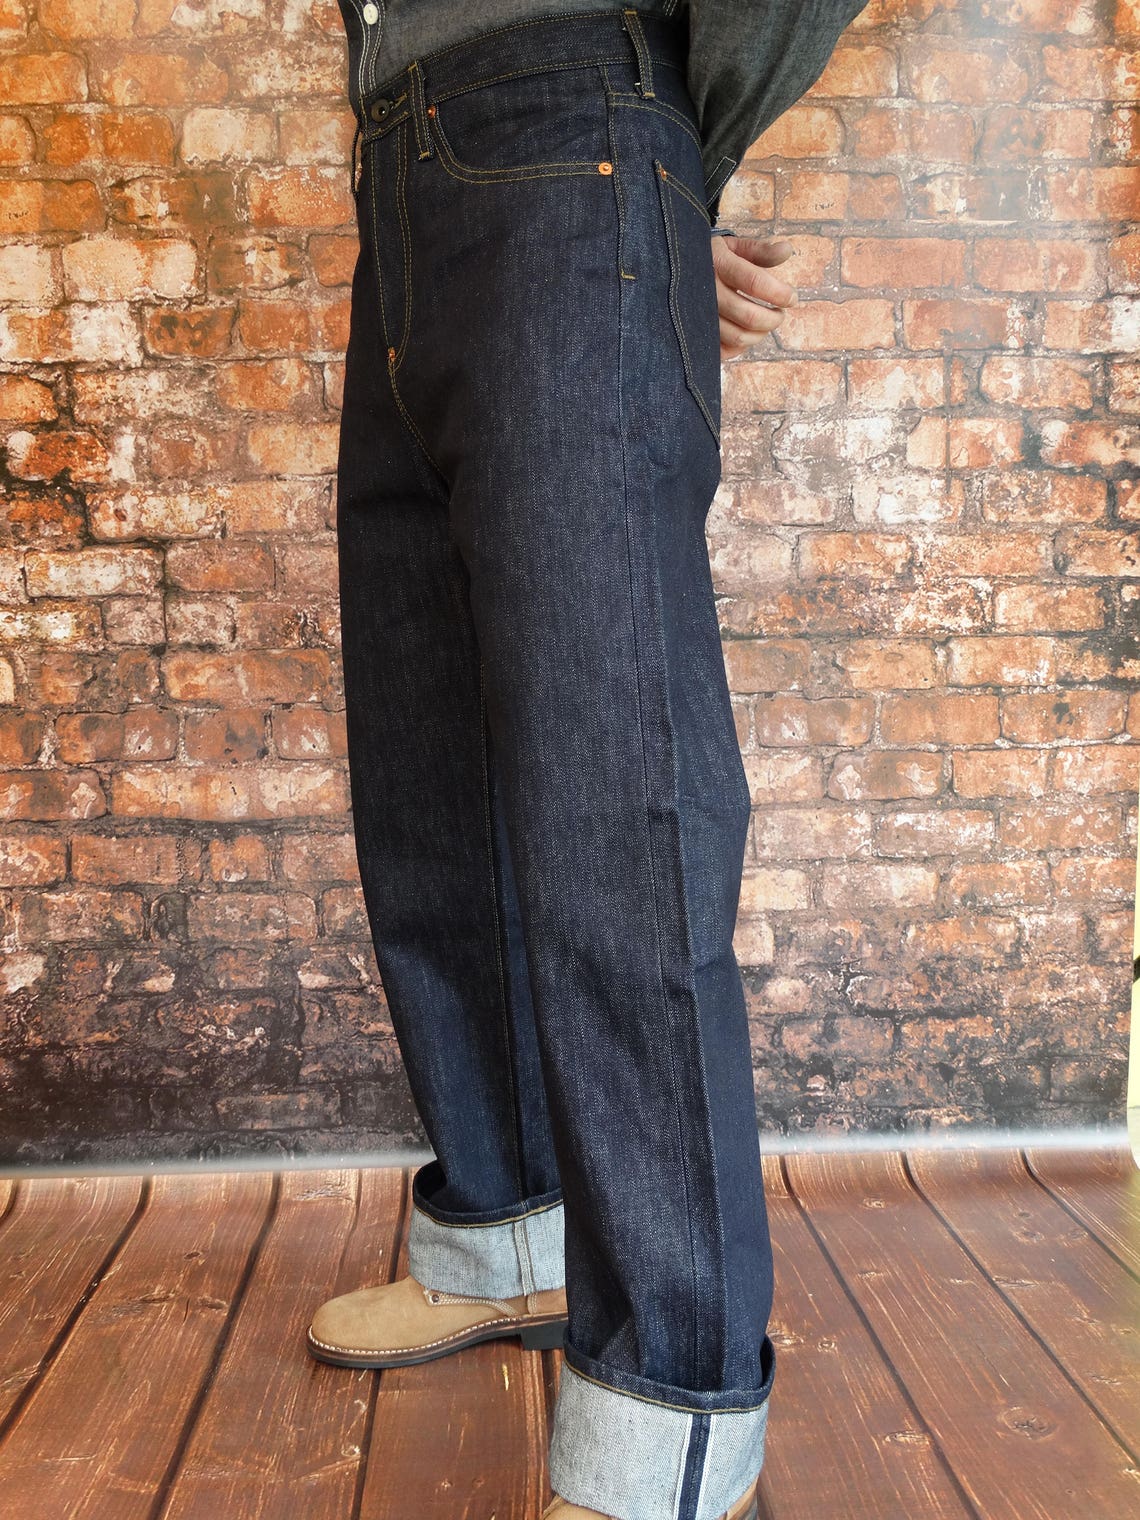 Lutece Mfg Co Quartermaster Denim Jeans 30-40s Style - Etsy